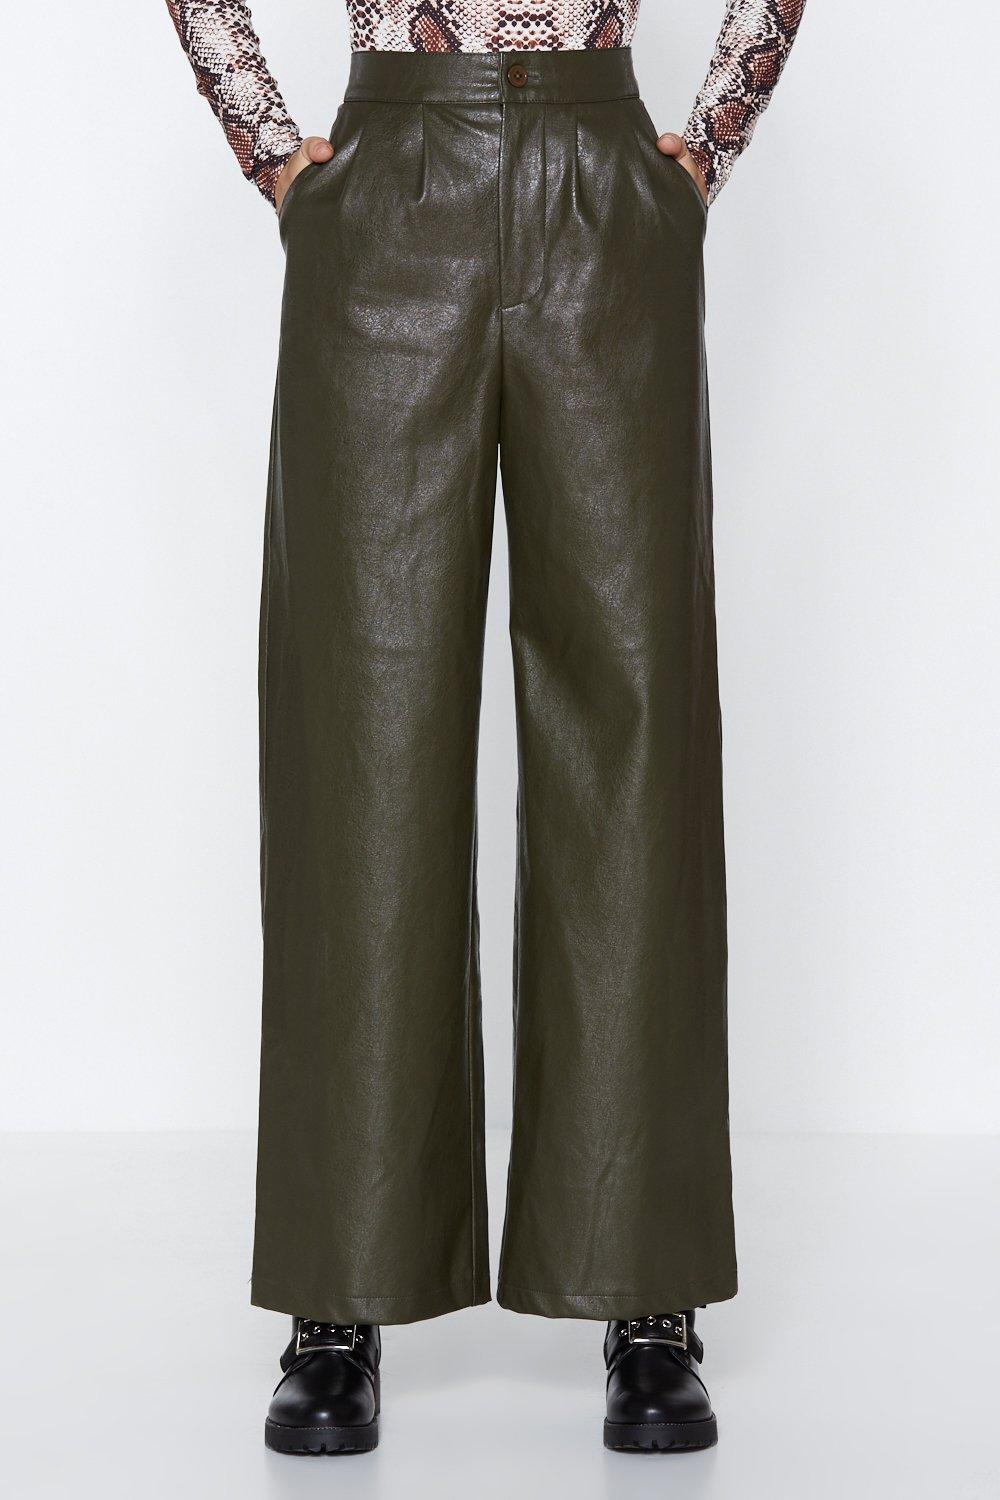 leather palazzo pants